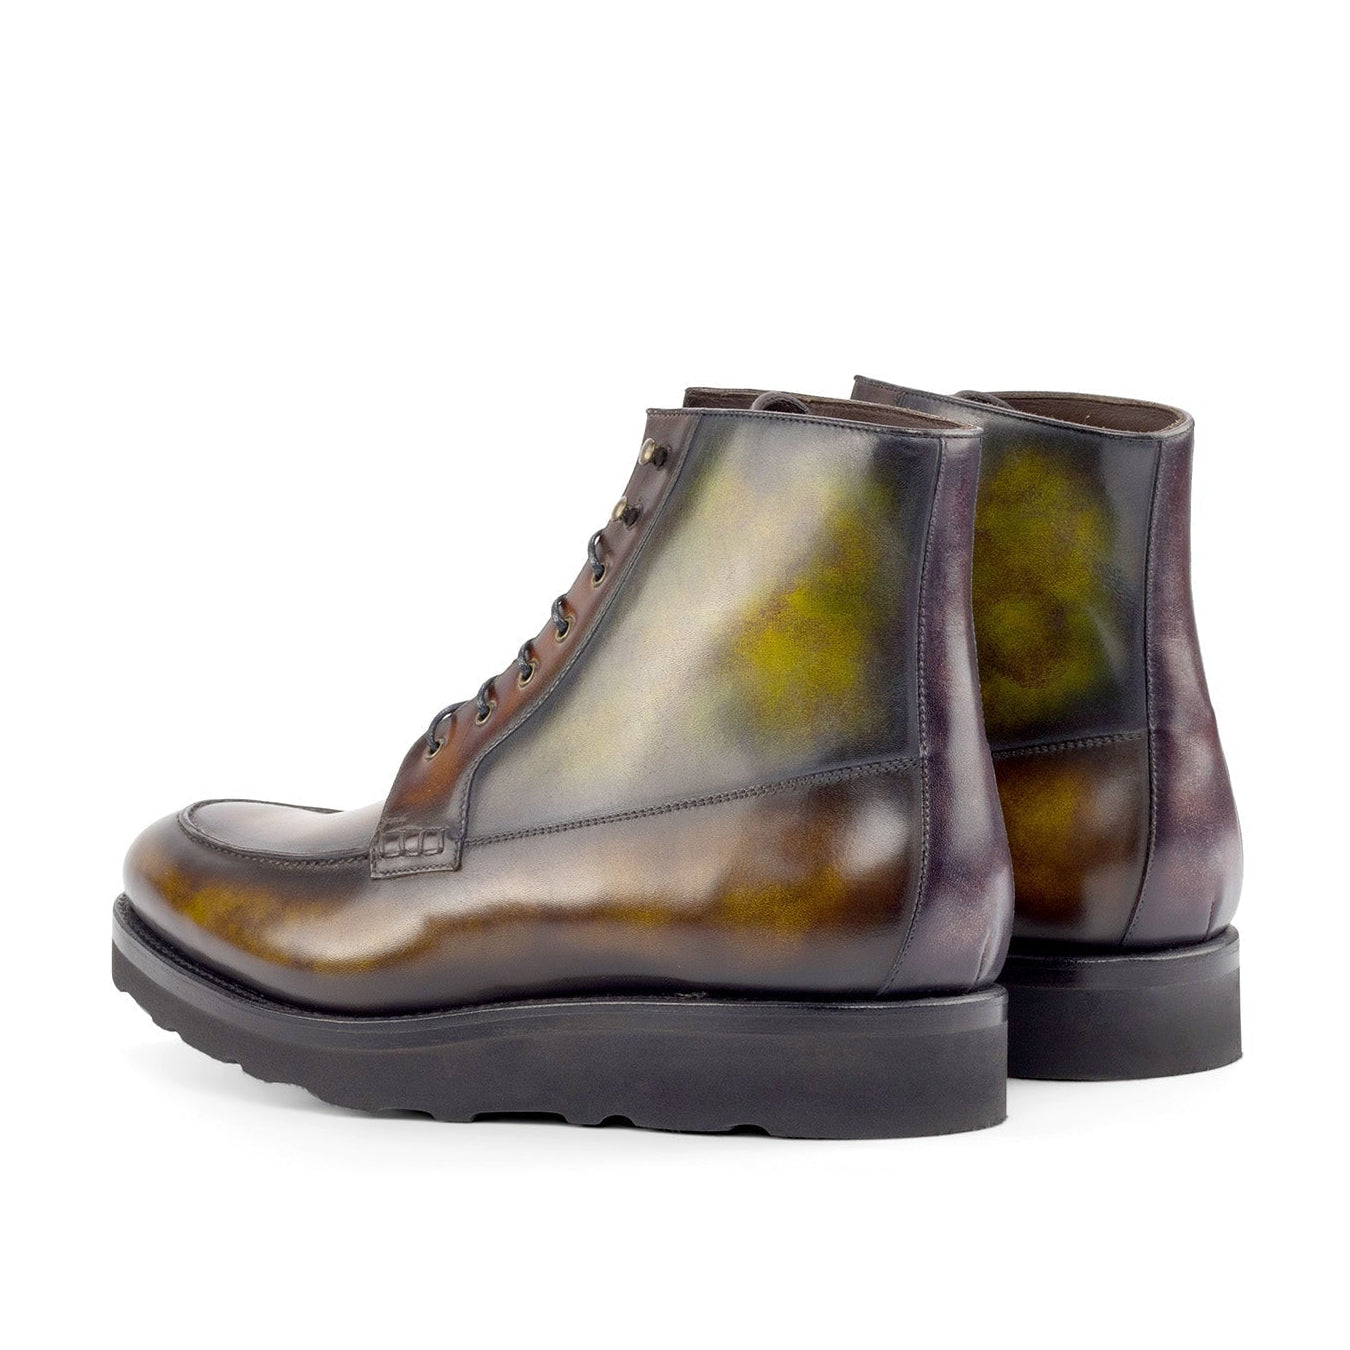 Ambrogio Bespoke Men's Shoes Multi-Color Crocodile Print Leather / Fabric Monk-Straps Loafers (AMB2277)